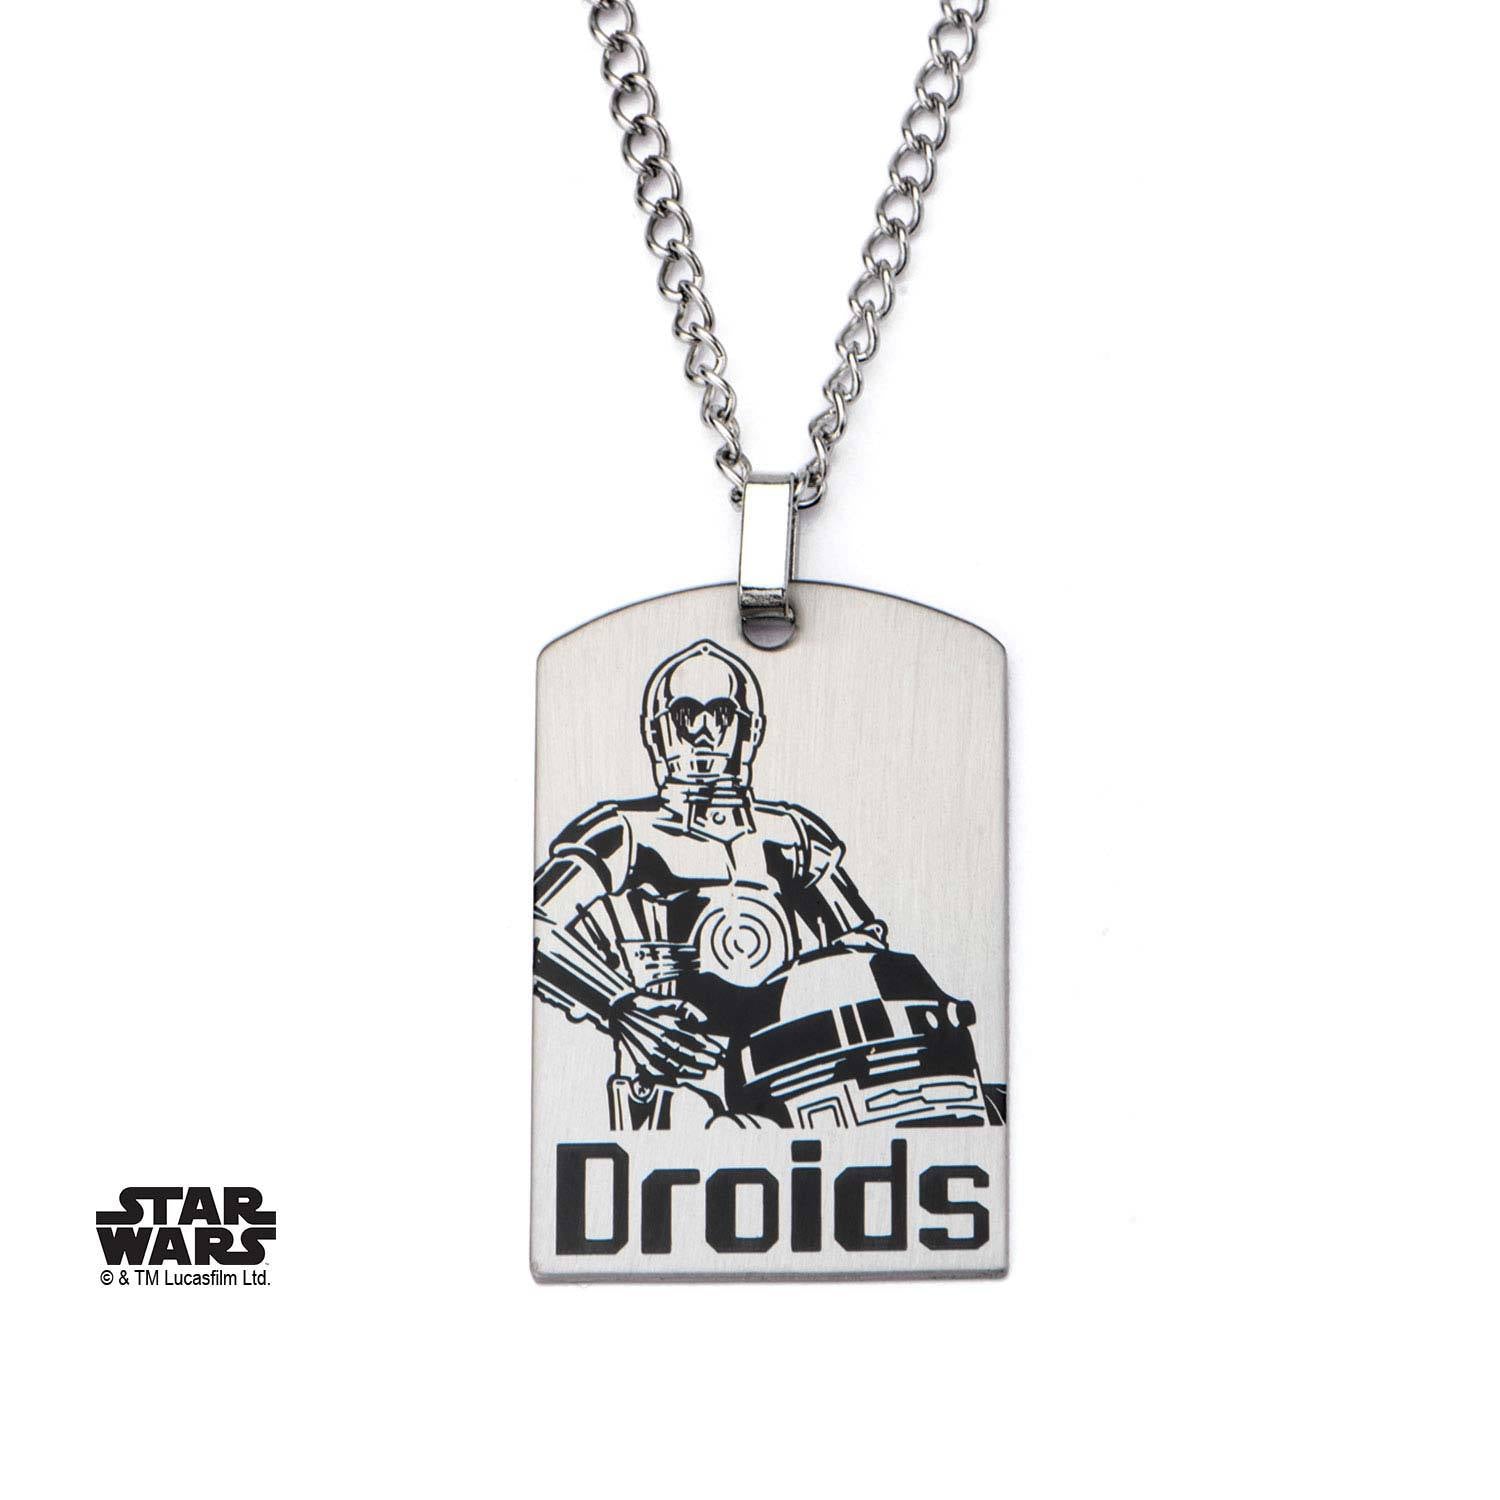 Star Wars C-3PO Droids Dog Tag Pendant Necklace